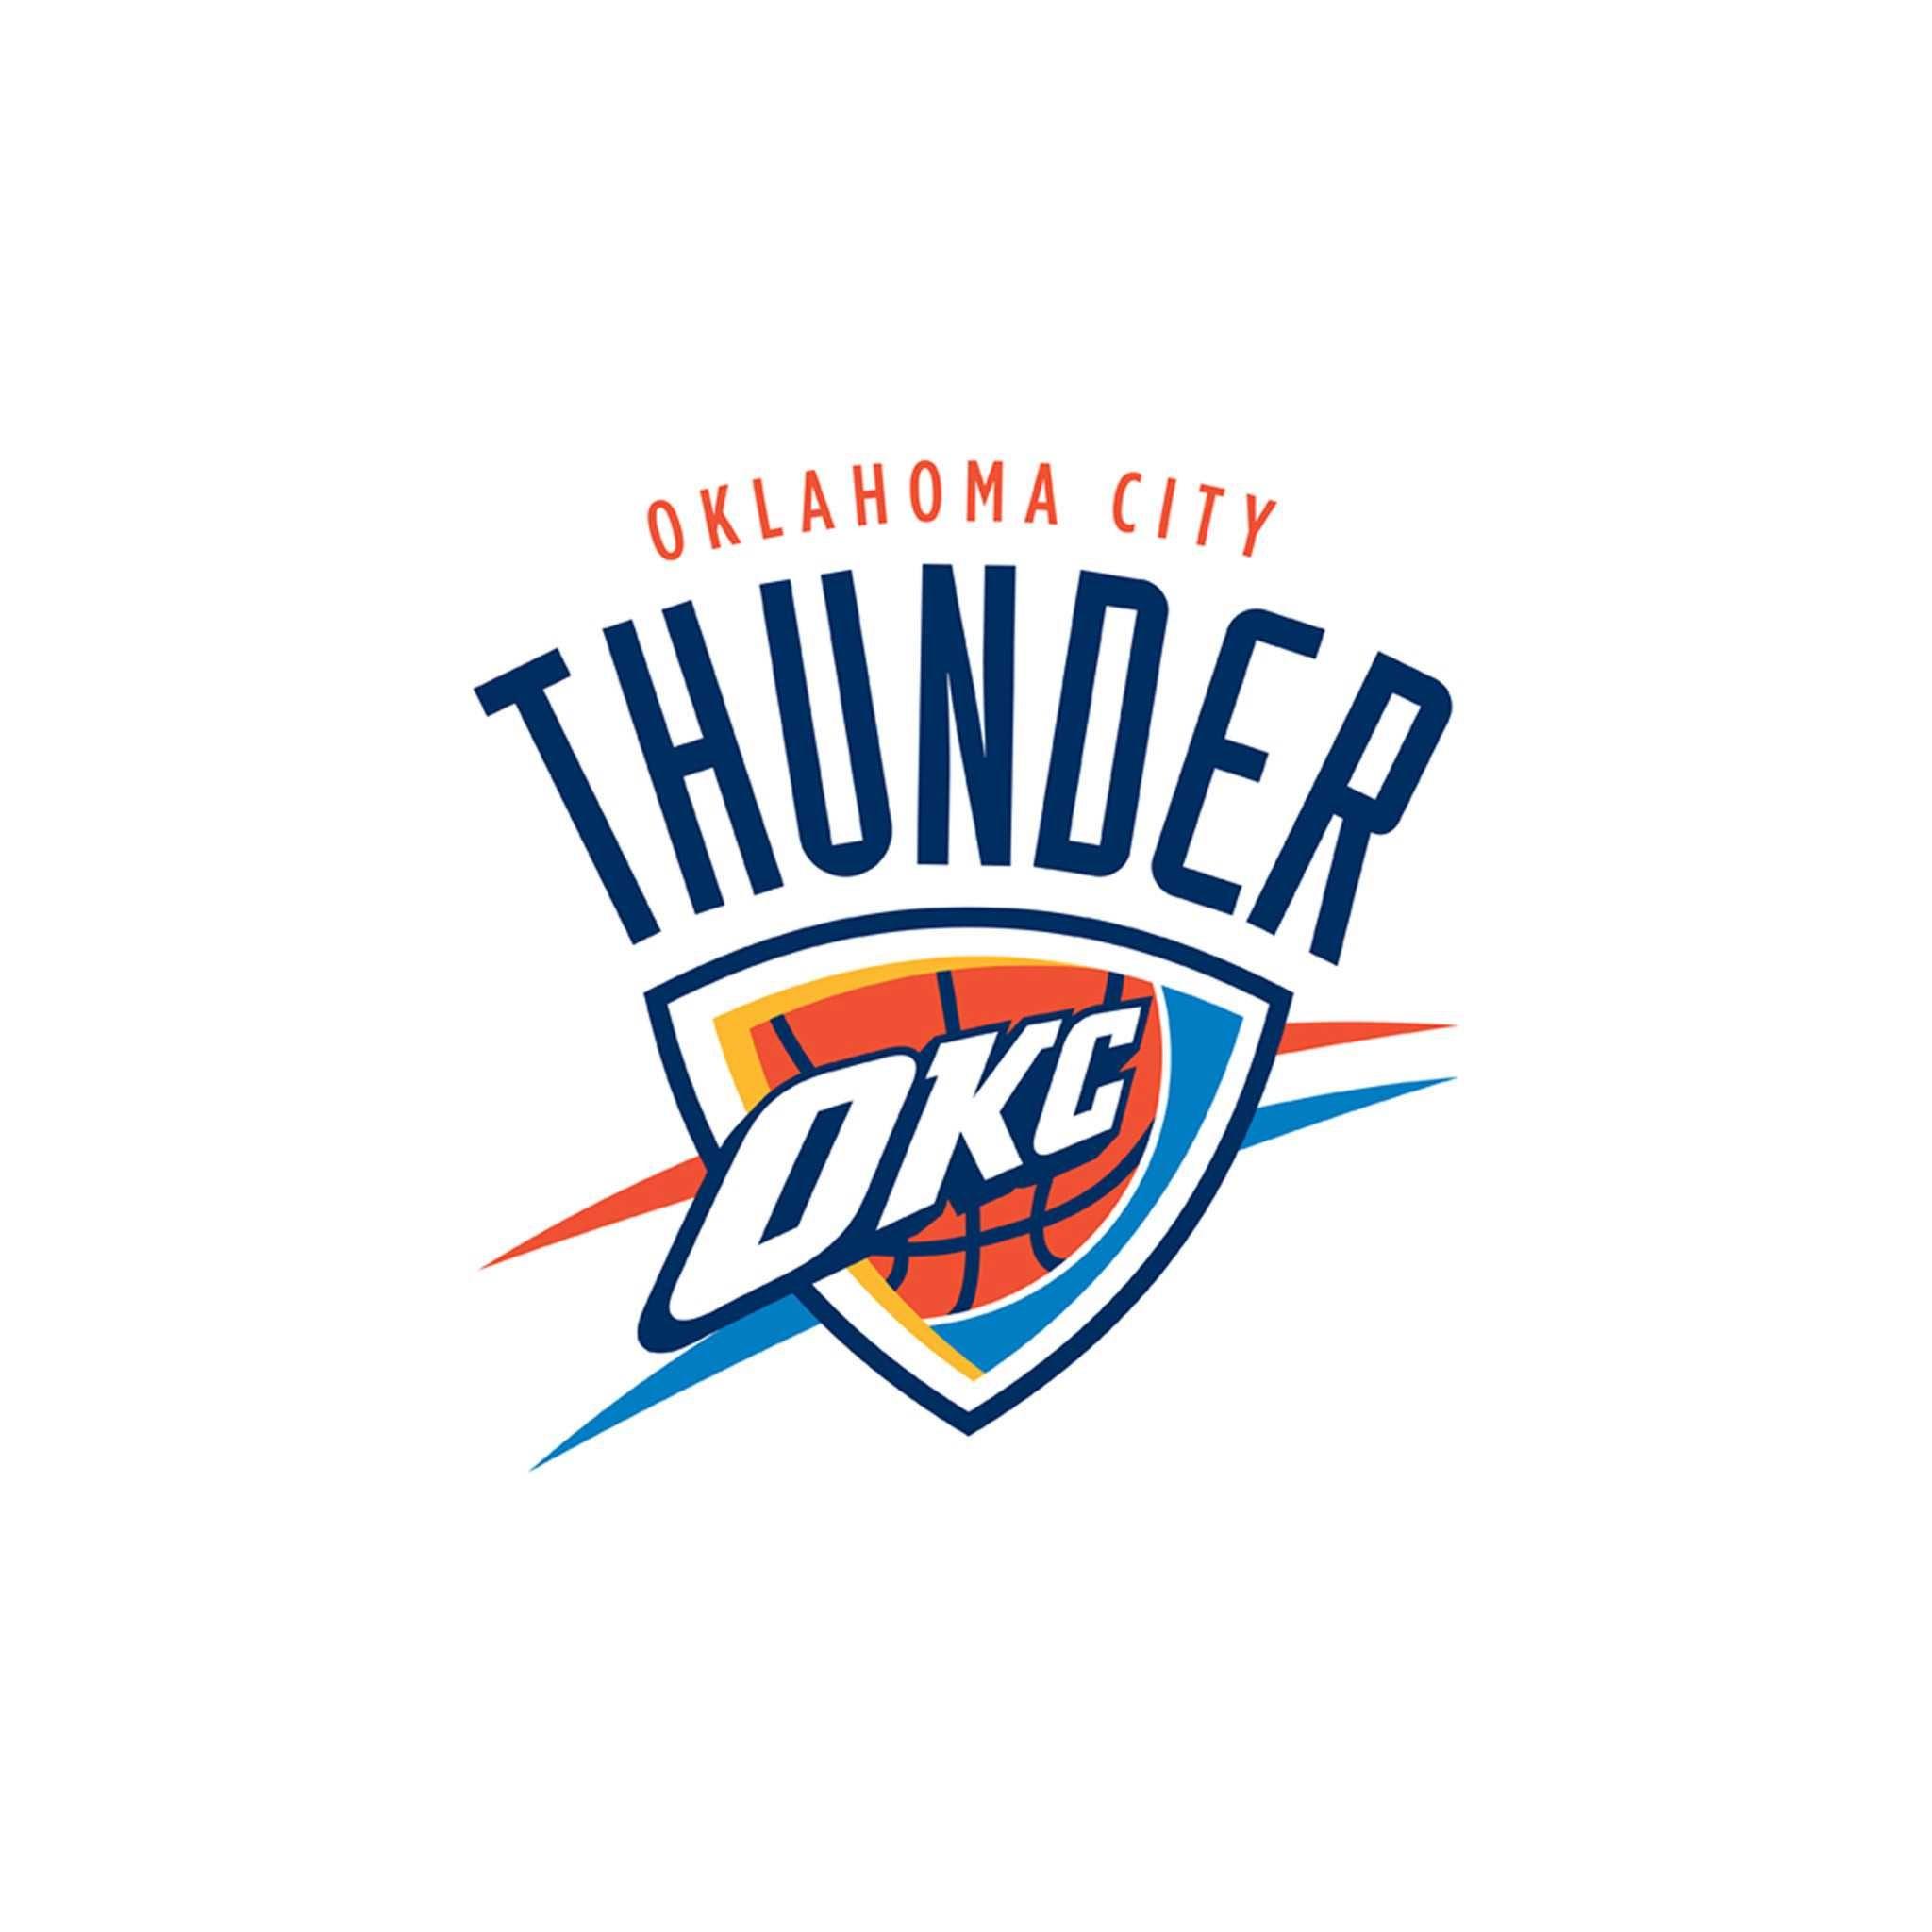 Oklahoma City Thunder Wallpaper Widescreen HD Pics Of Pc Pixatra.com